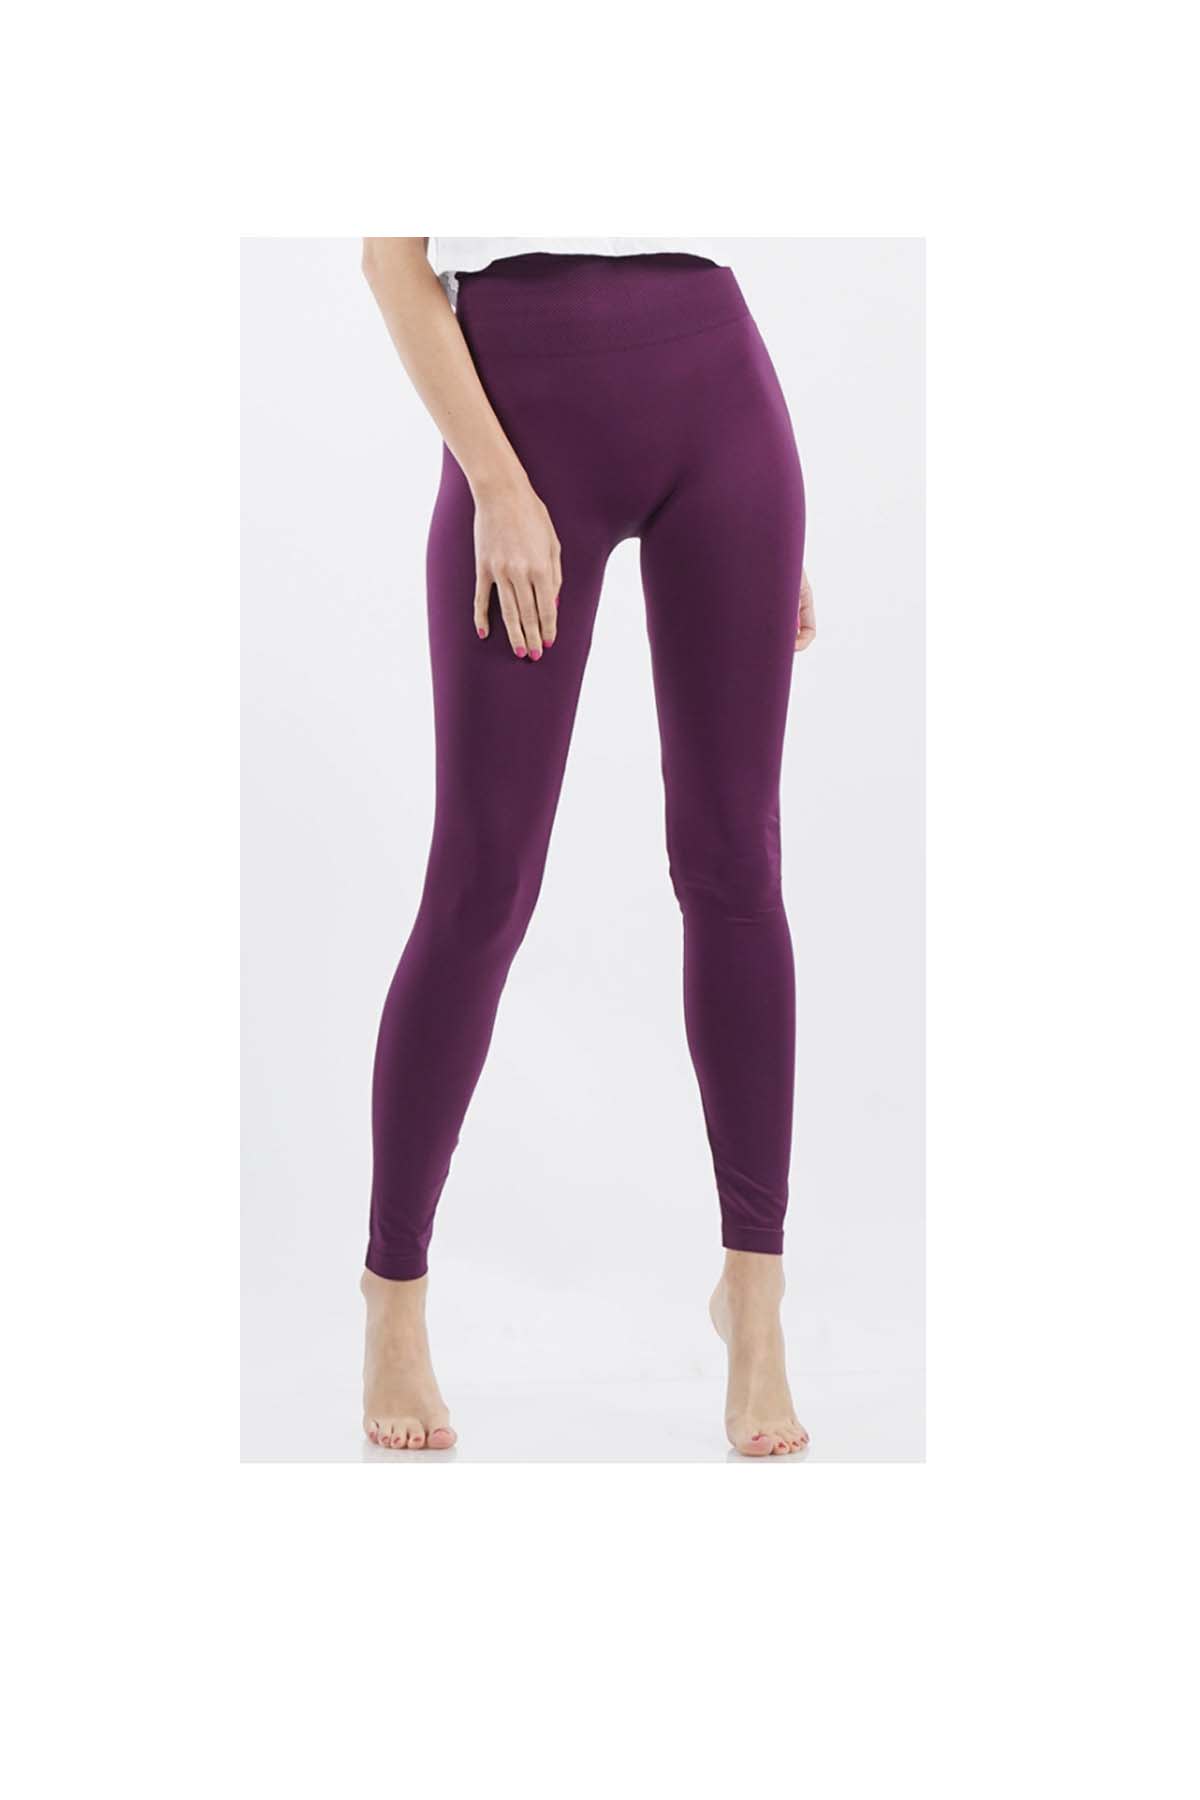 Yogalicious Lux Women's Hi-Rise Yoga Pant Leggings mesh plum color